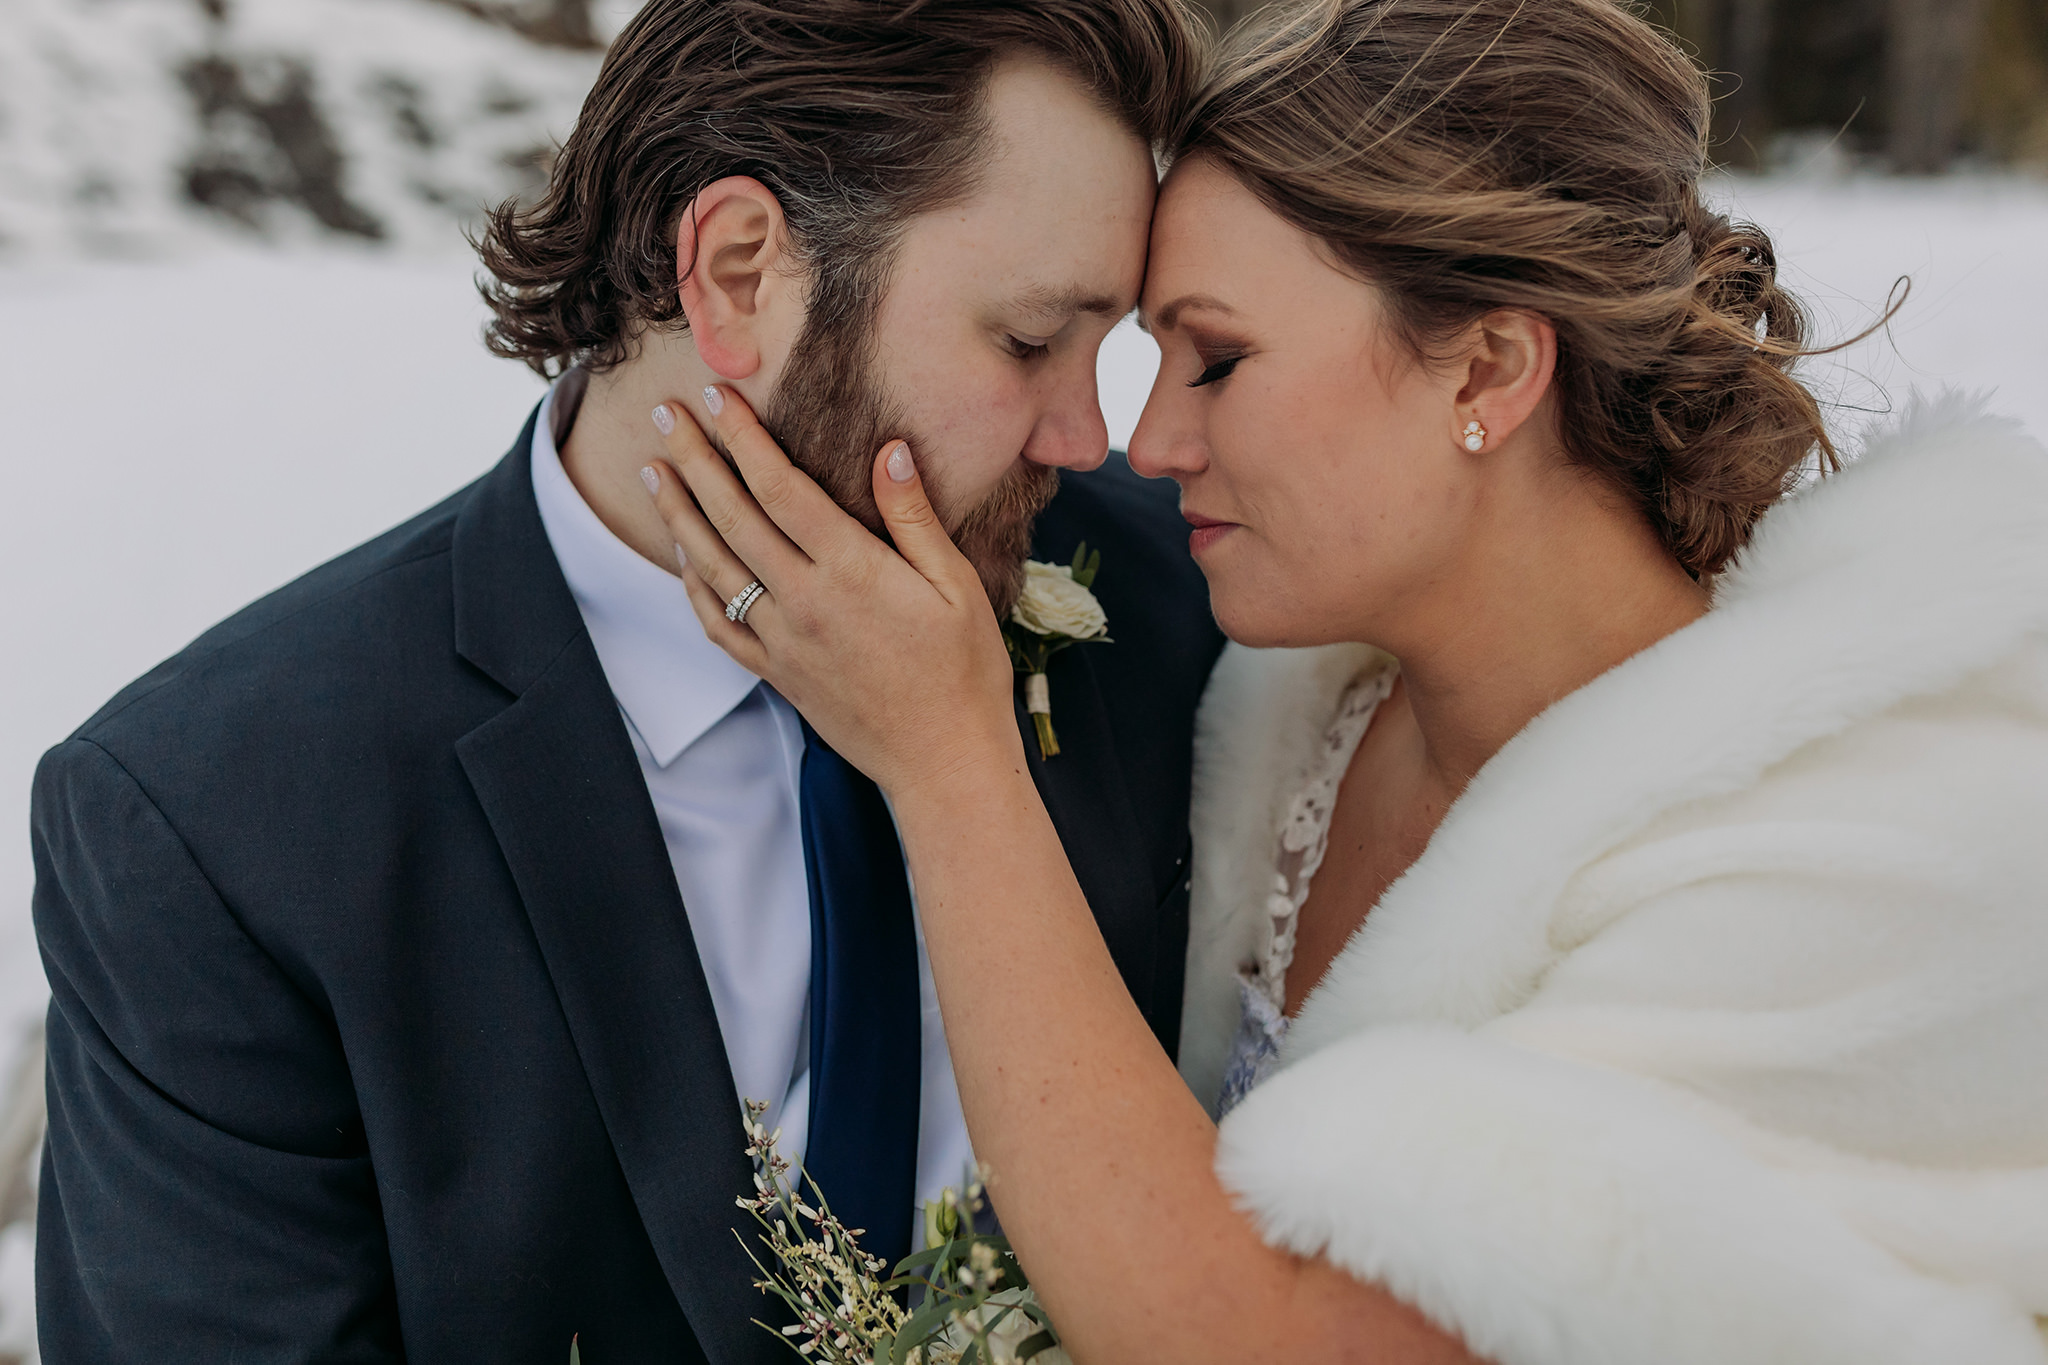 Bow Falls bride & groom portraits Winter mountain wedding photos by Banff Elopement Photographer ENV Photography